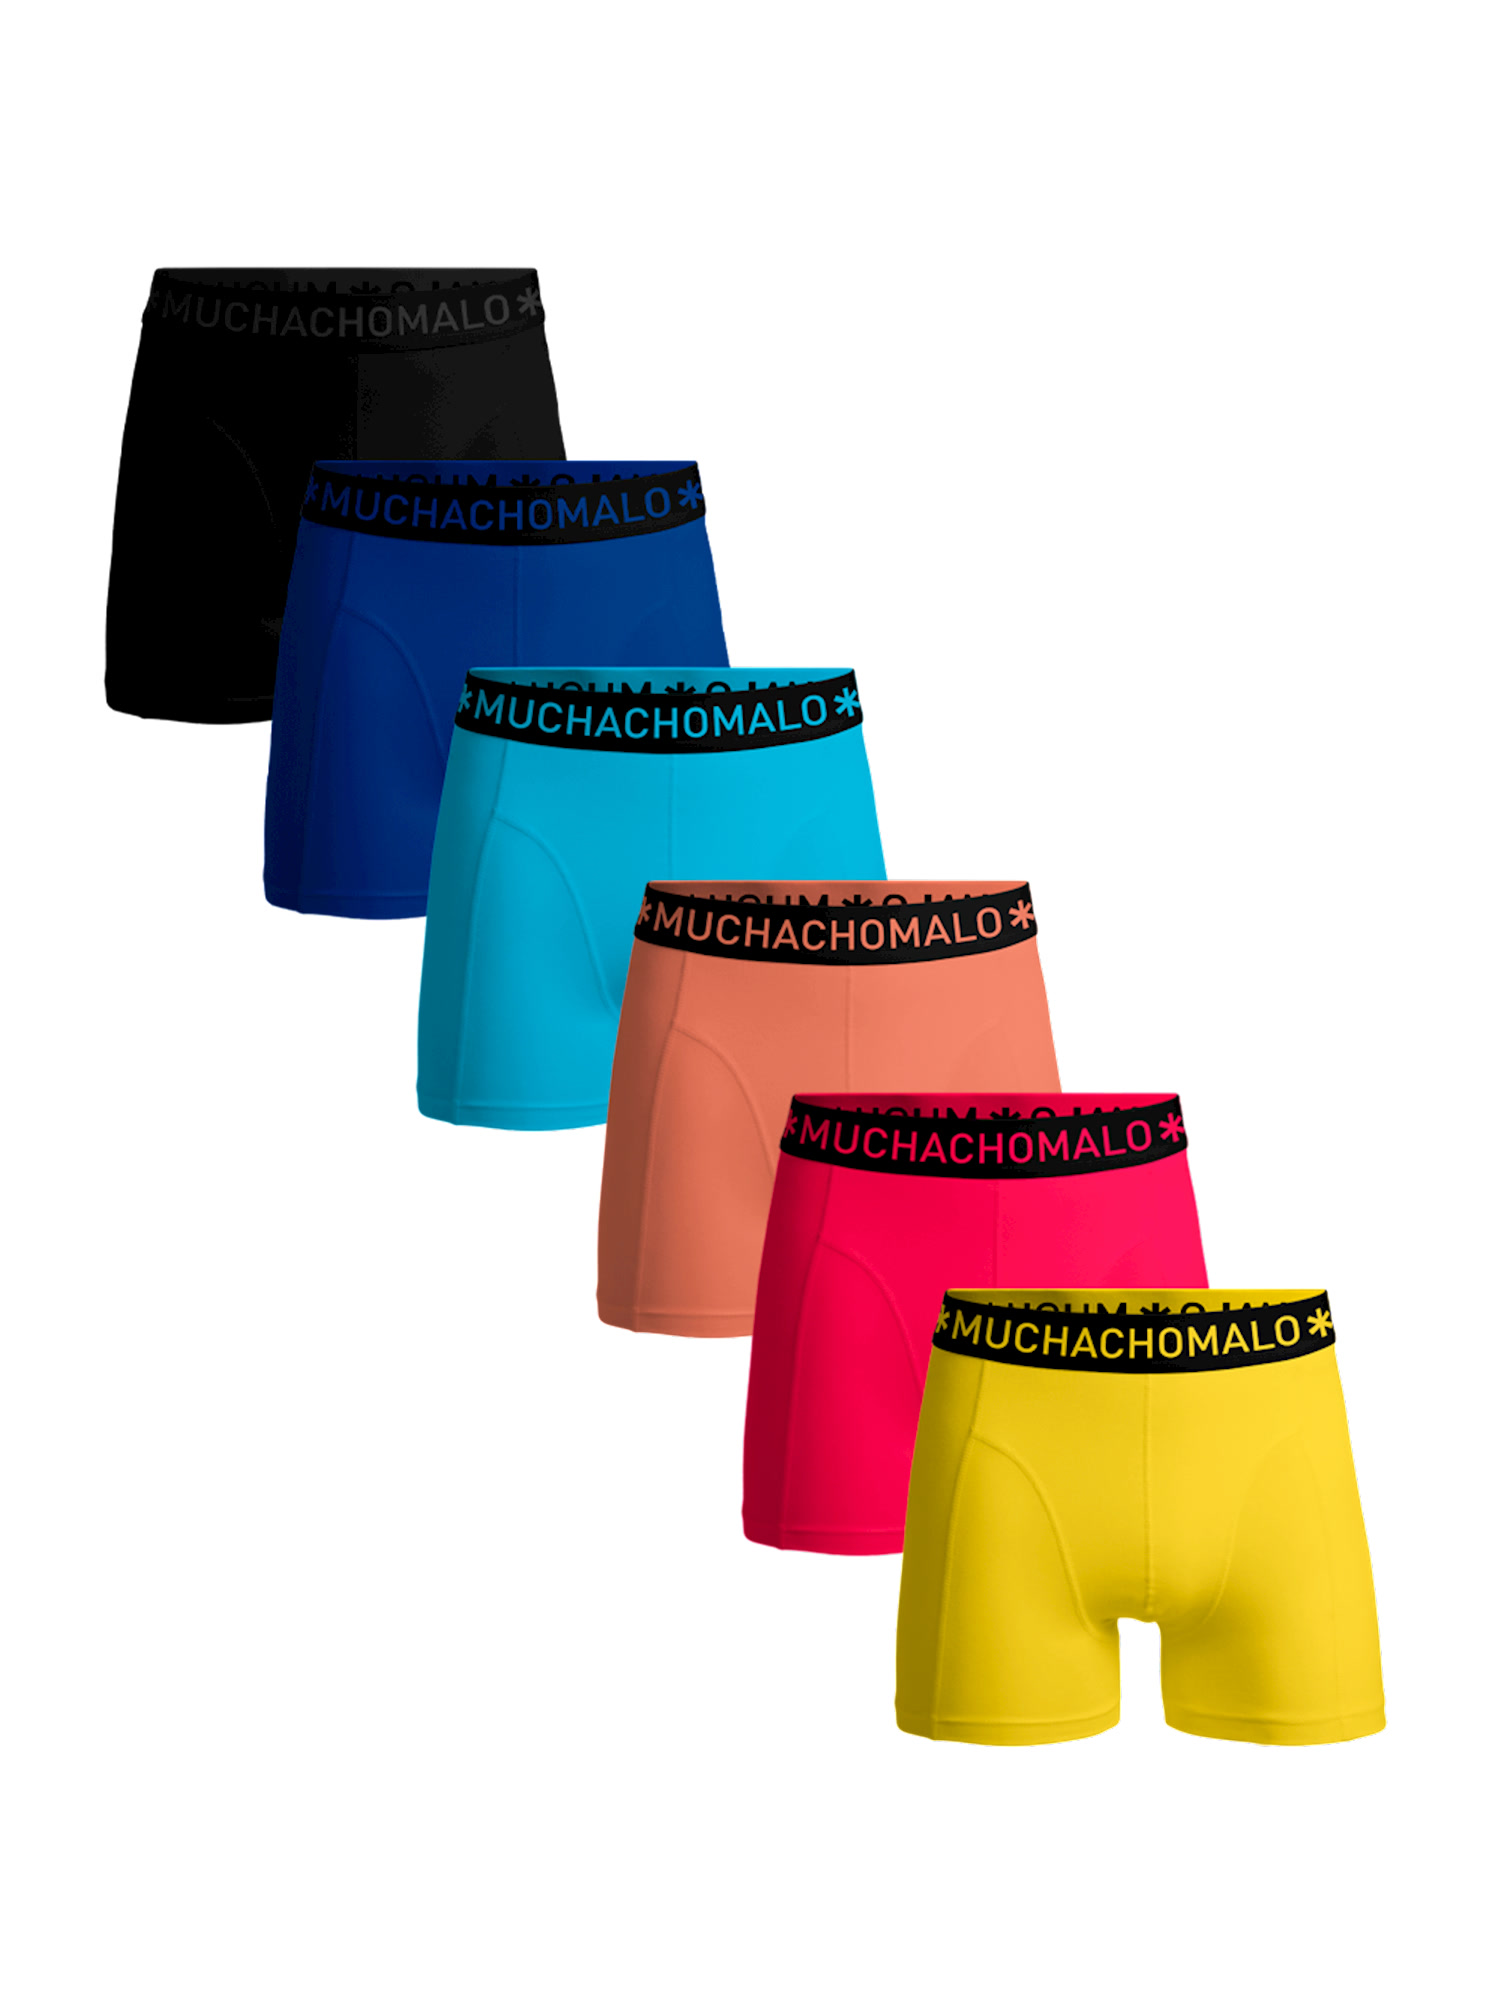 Боксеры Muchachomalo 6er-Set: Boxershorts, цвет Black/Blue/Blue/Pink/Orange/Yellow боксеры muchachomalo 2er set boxershorts цвет black black blue blue